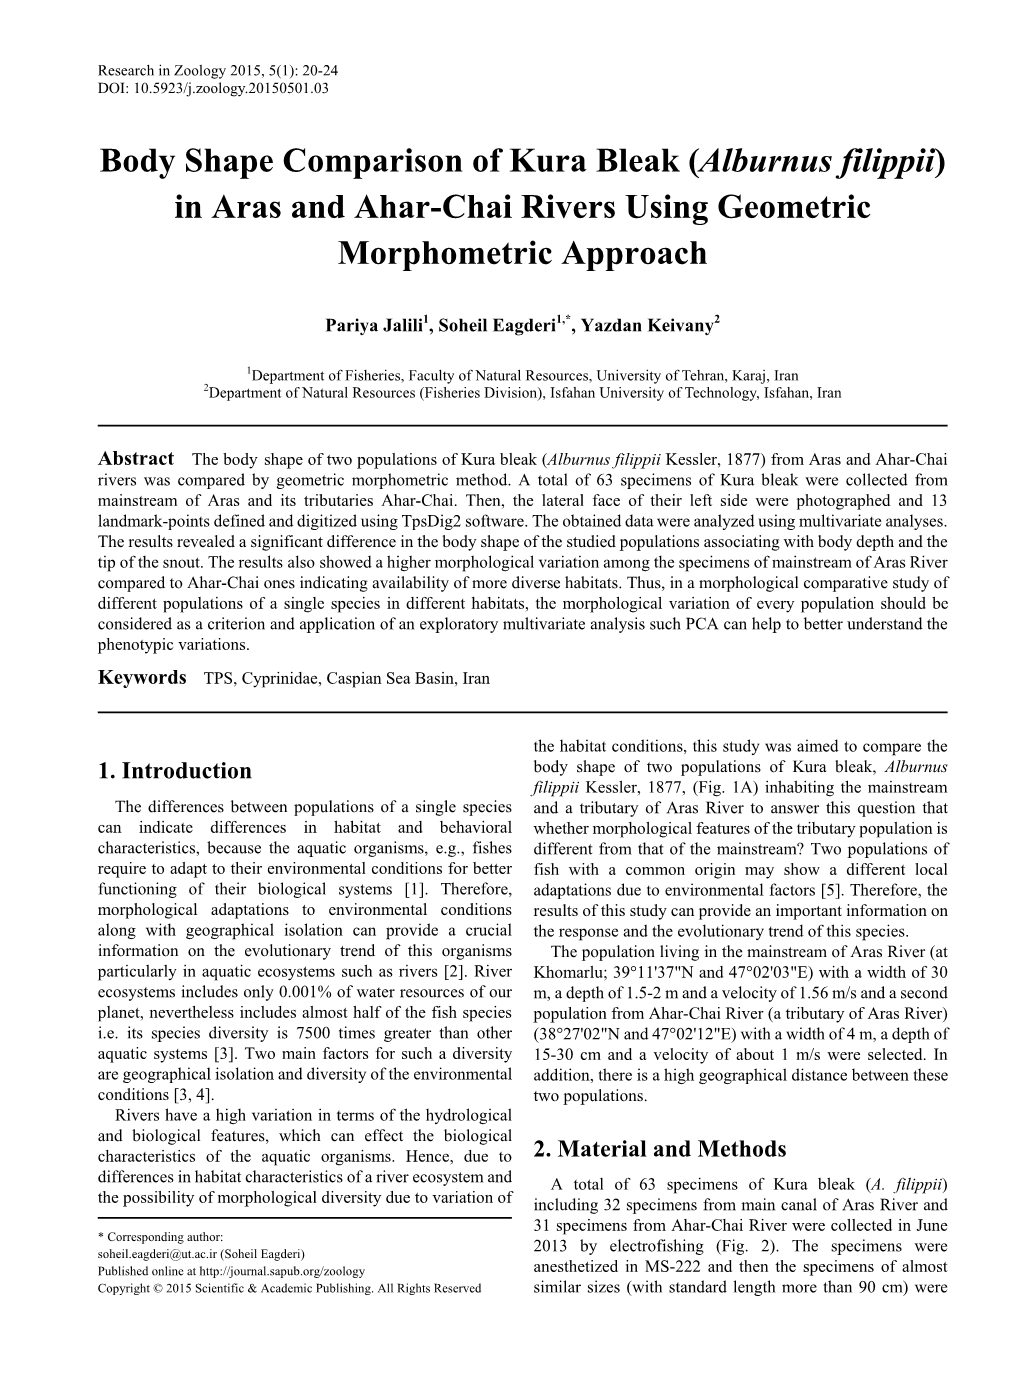 Body Shape Comparison of Kura Bleak (Alburnus Filippii) in Aras and Ahar-Chai Rivers Using Geometric Morphometric Approach